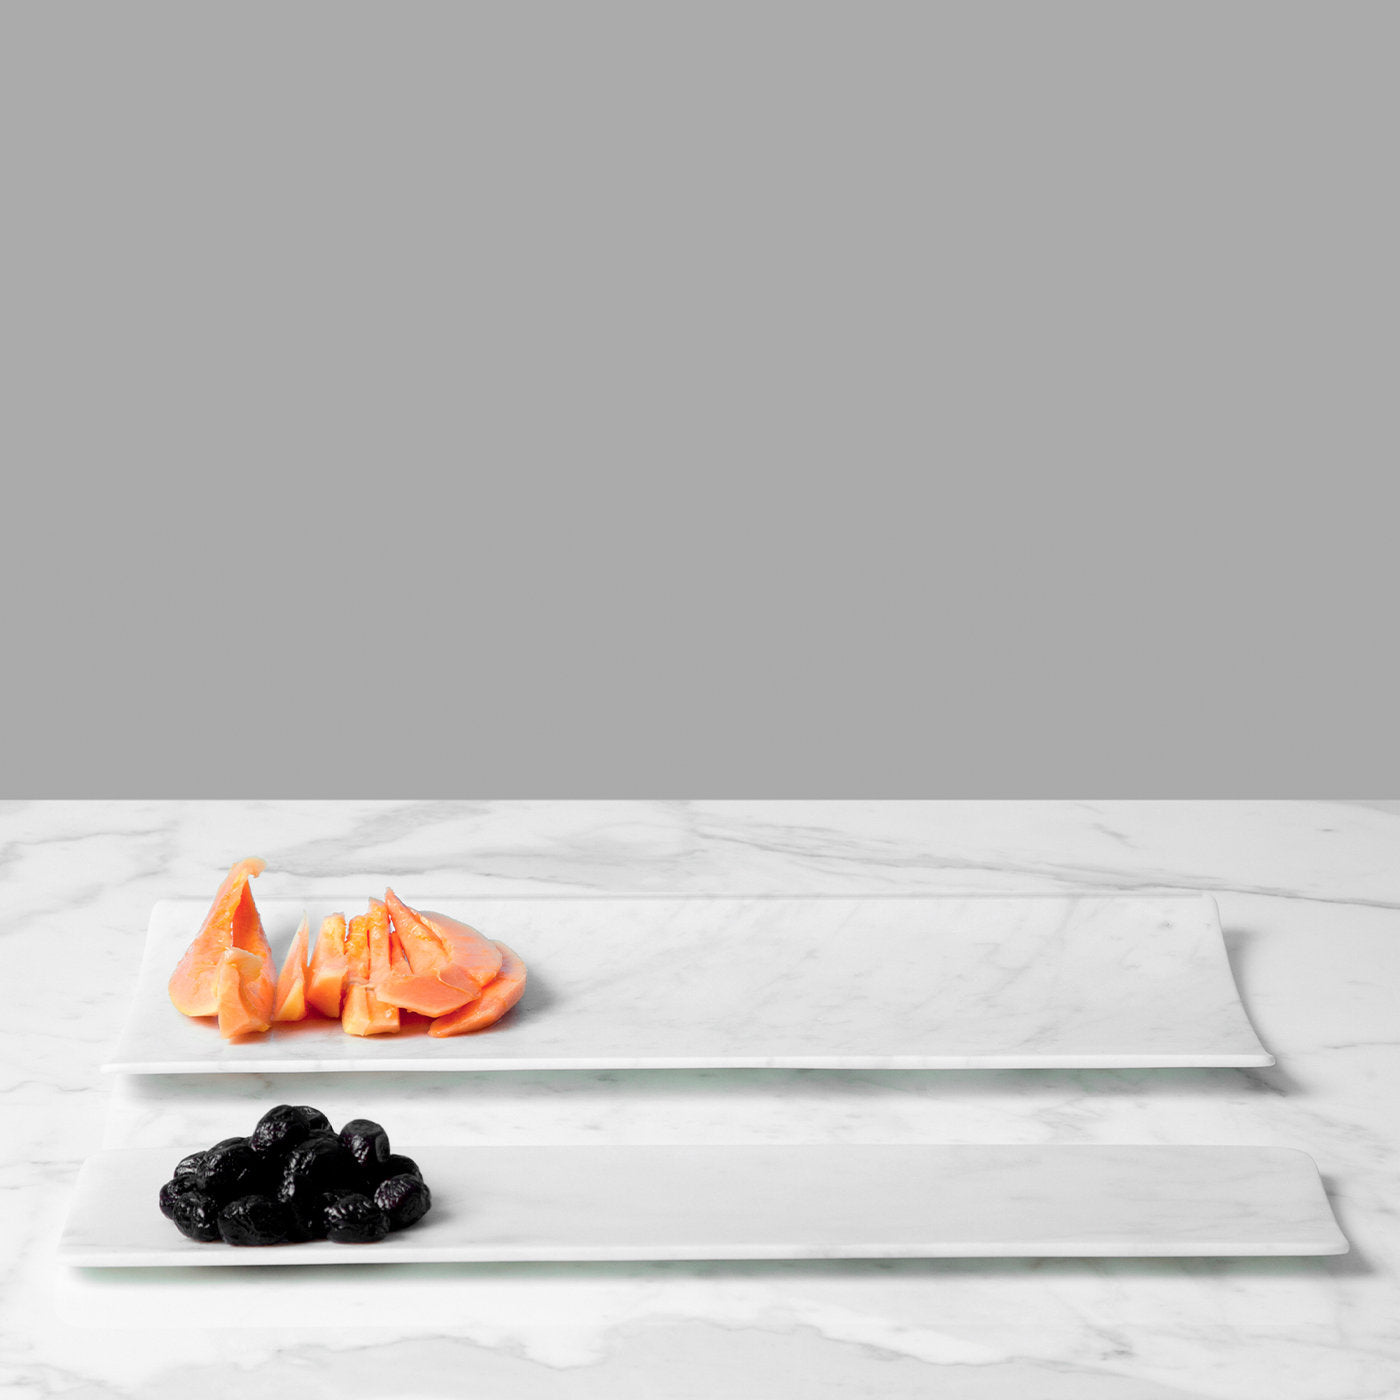 Curvato Medium White Carrara Tray by Studioformart - Alternative view 2